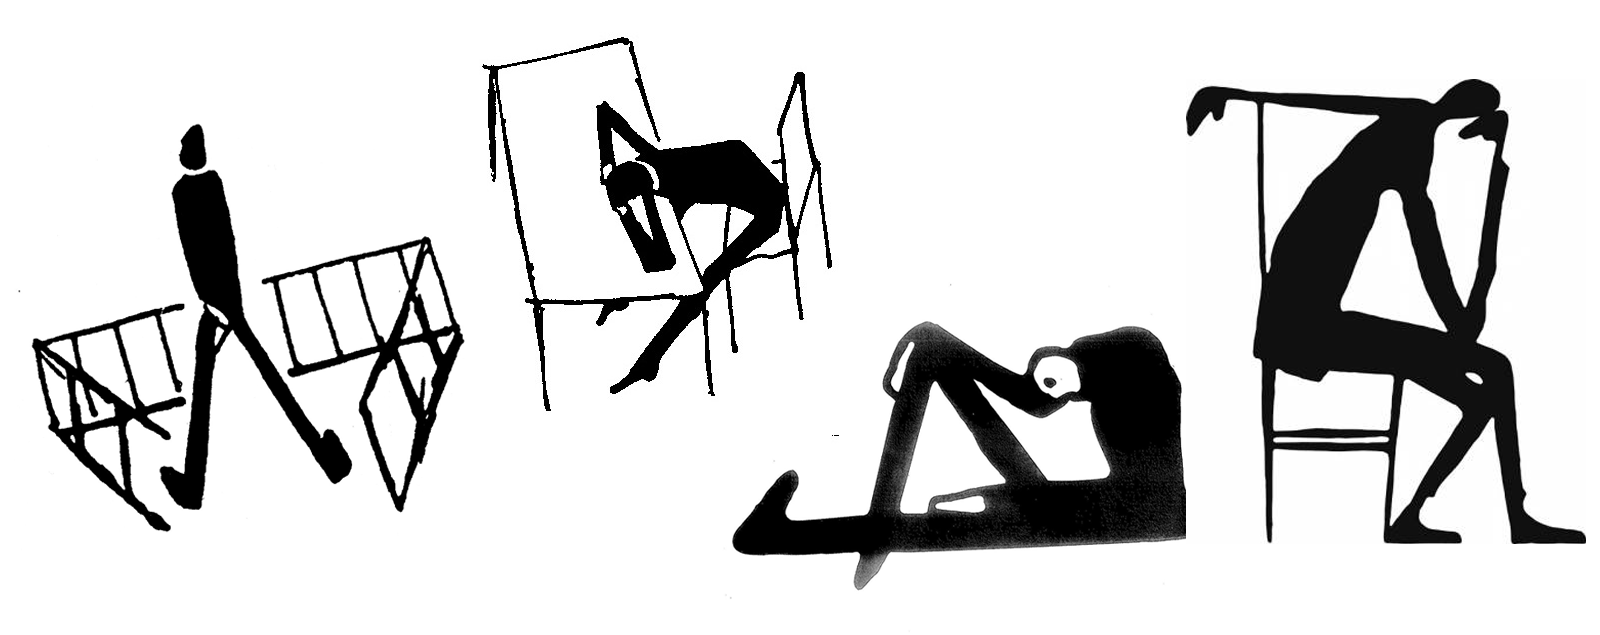 Franz Kafka's doodles of anxiety trymyui blog